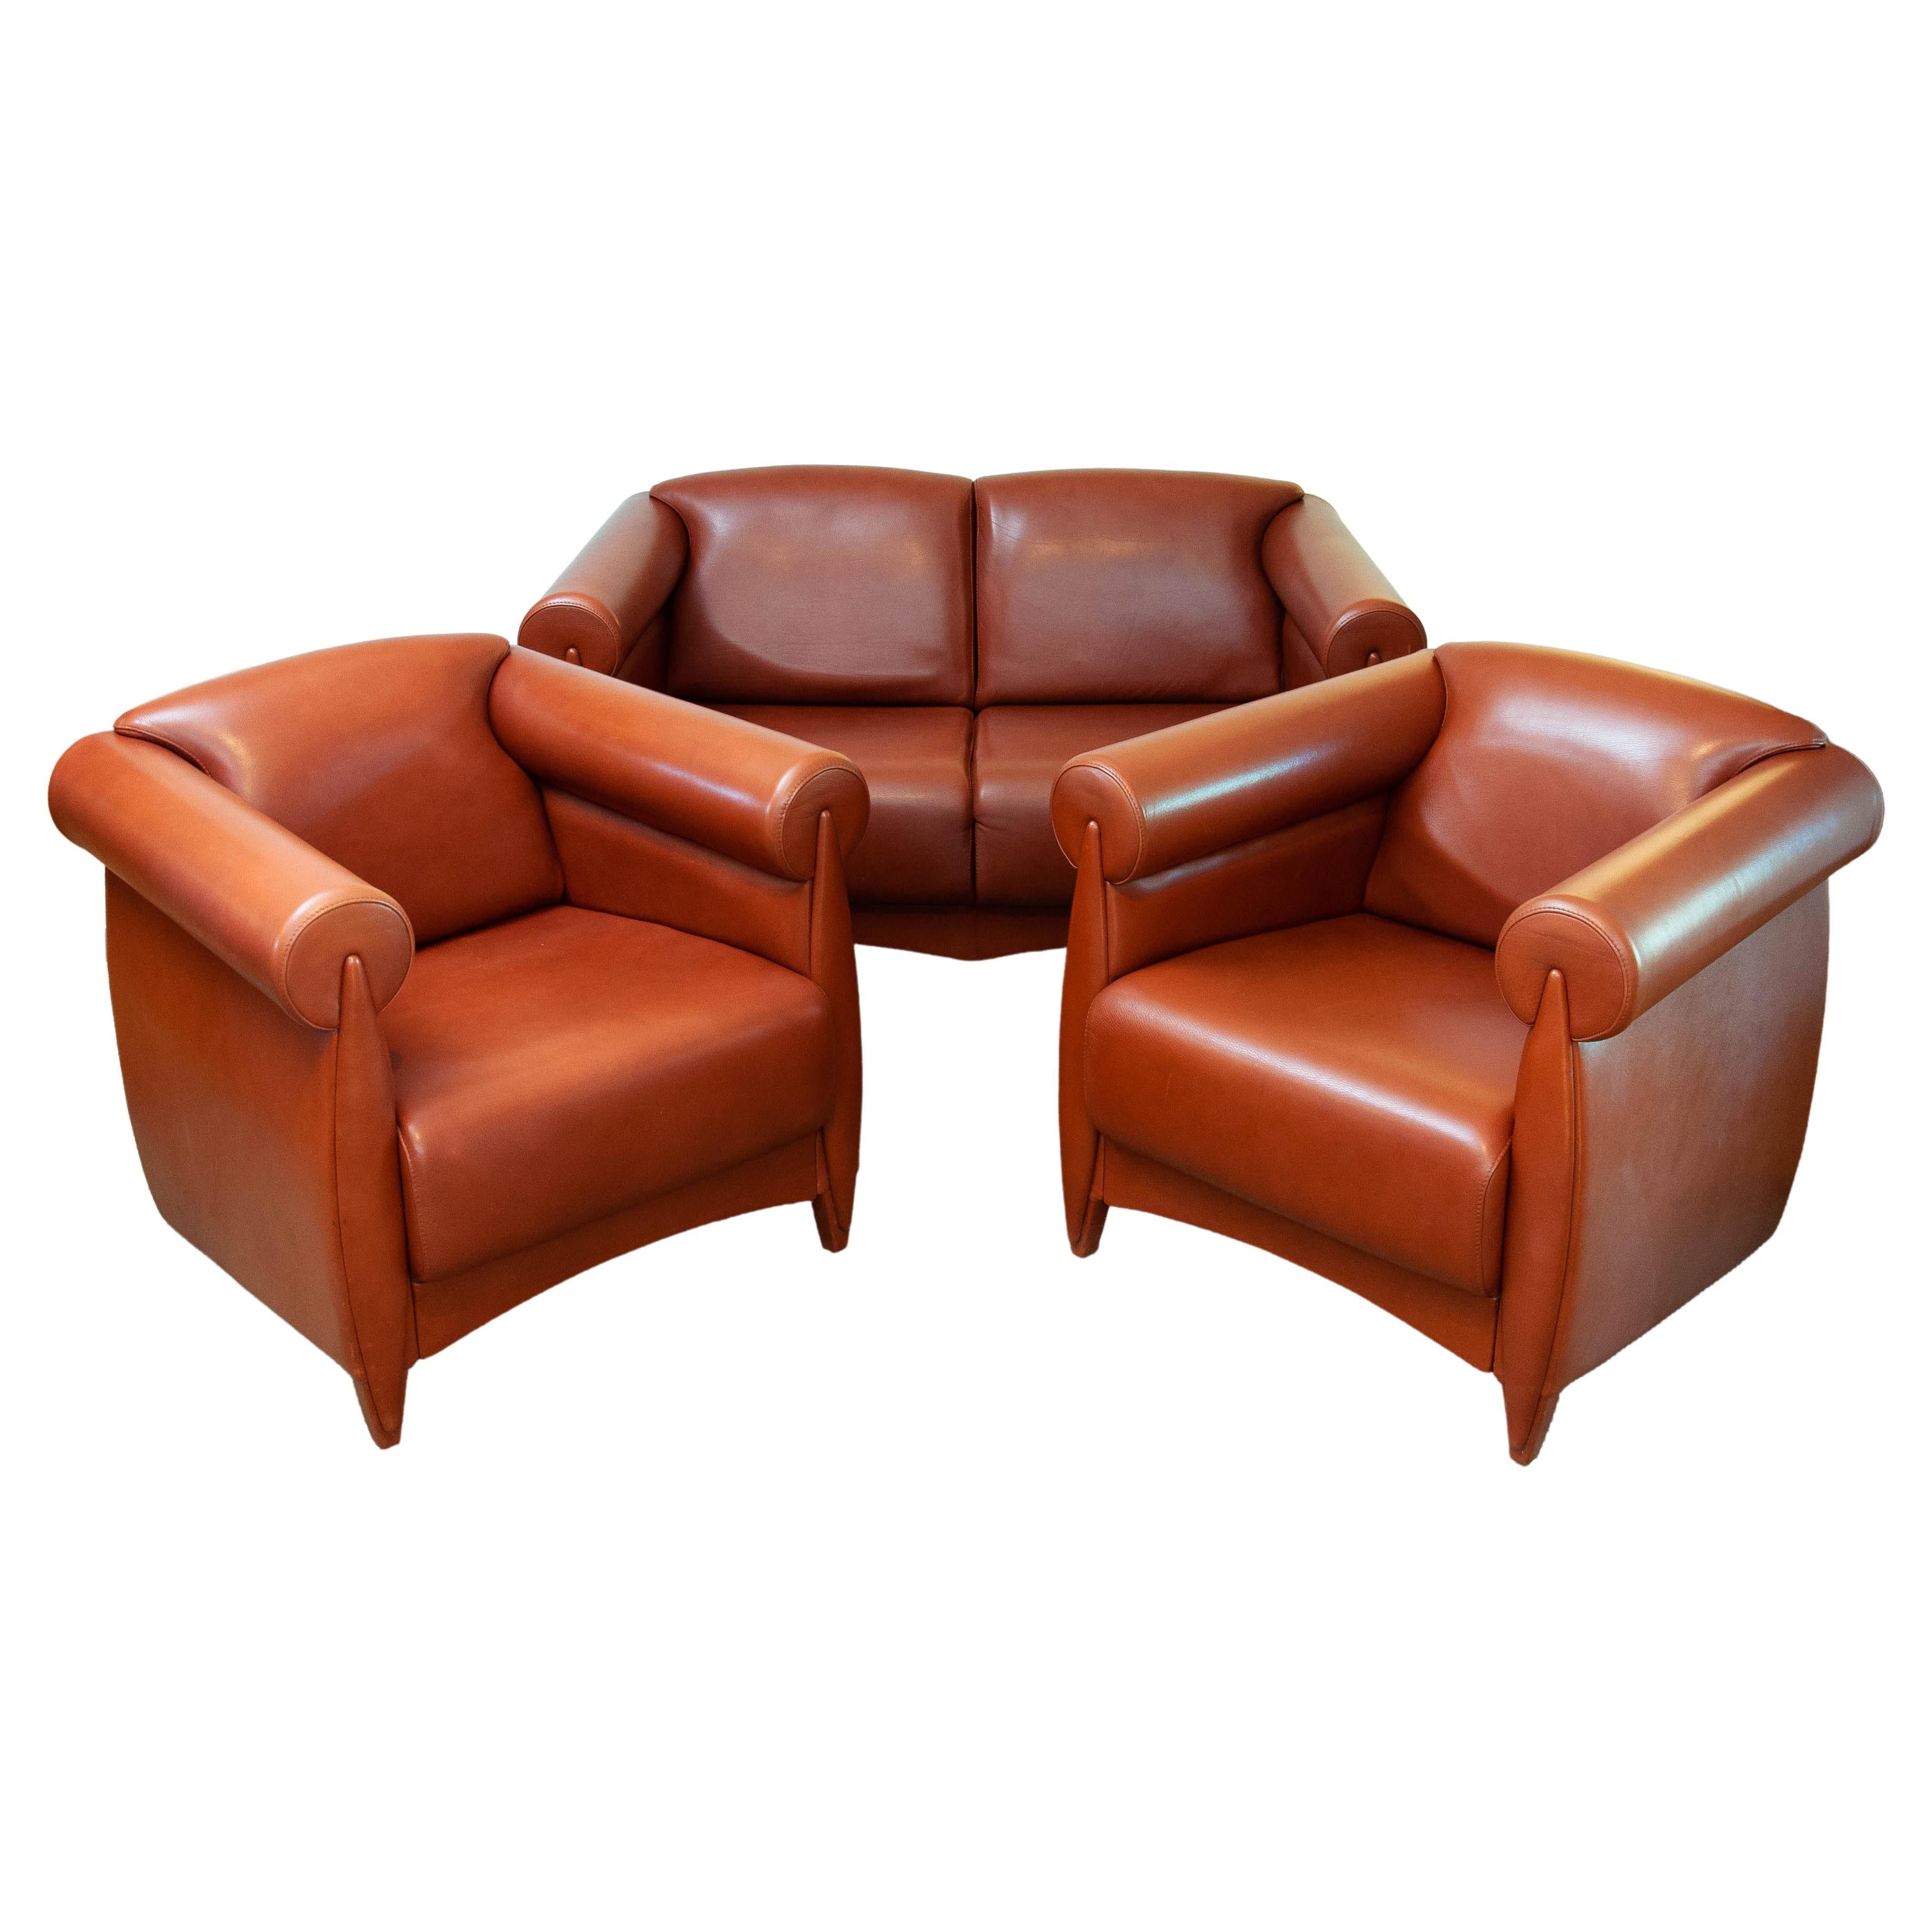 '80 Modern Art Deco Seating Group in Cognac Leather by Klaus Wettergren Denmark 